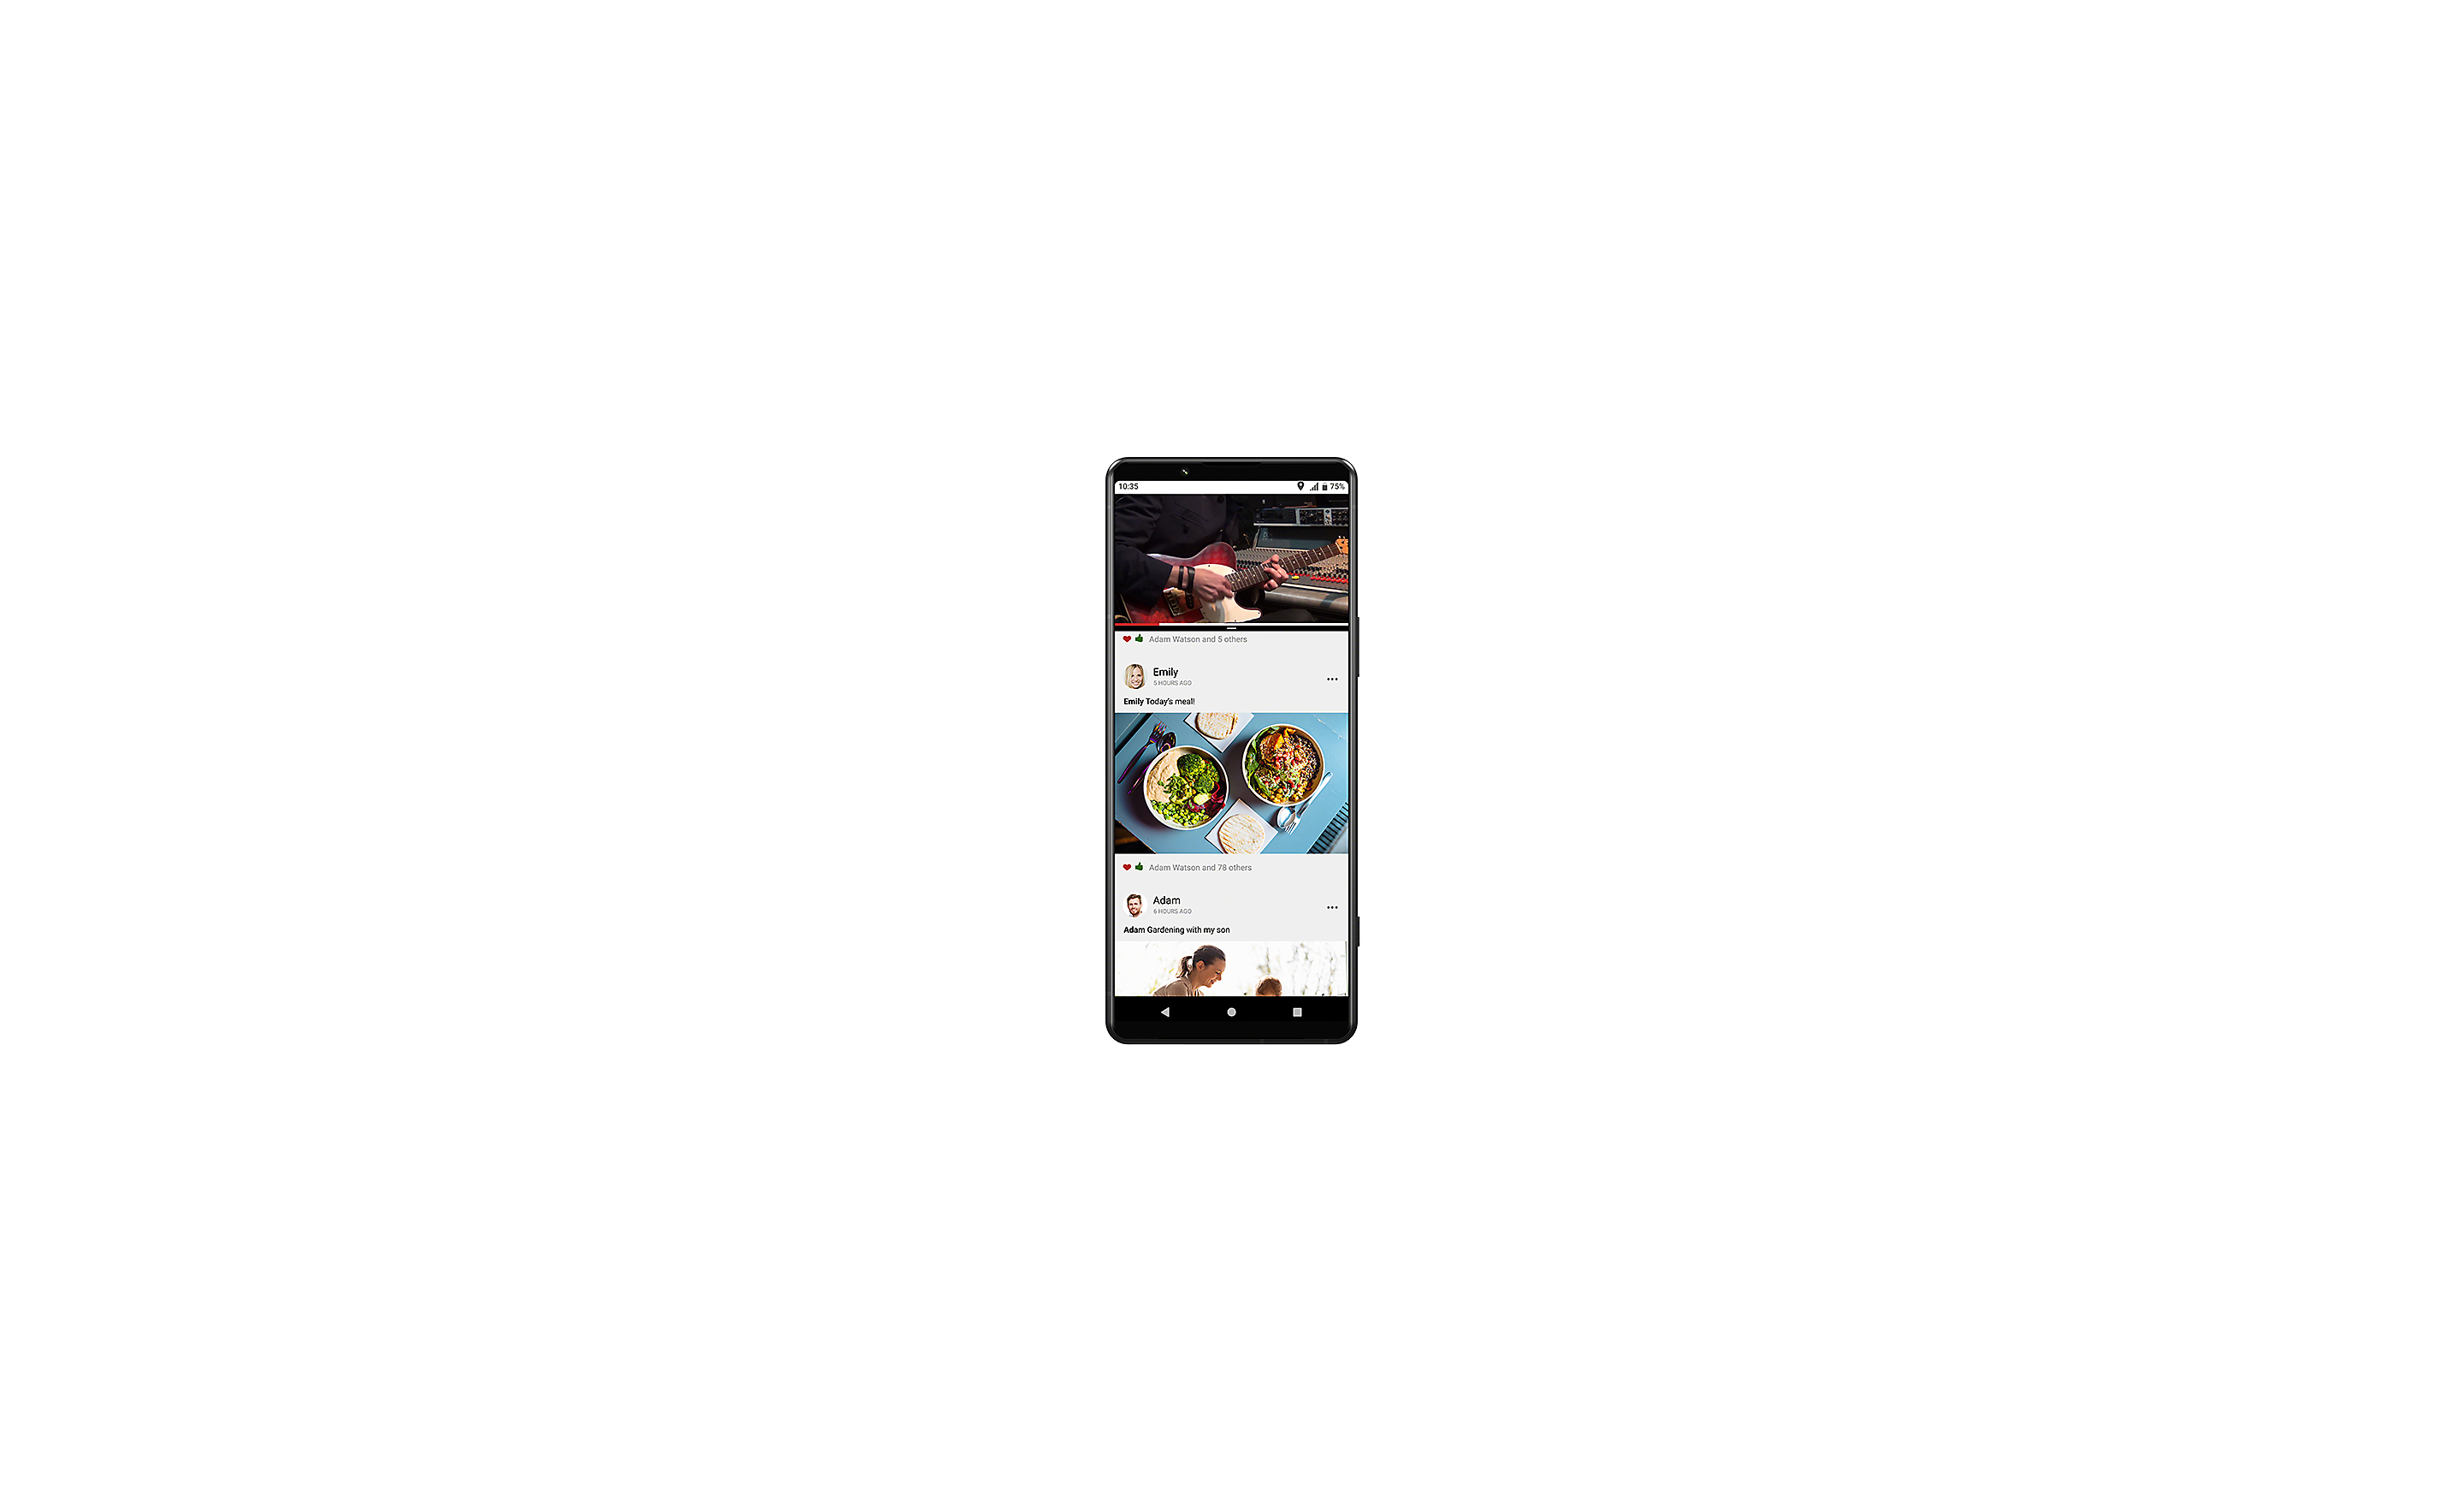 Xperia Smartphone mit angezeigter Popup-Fenster-UI